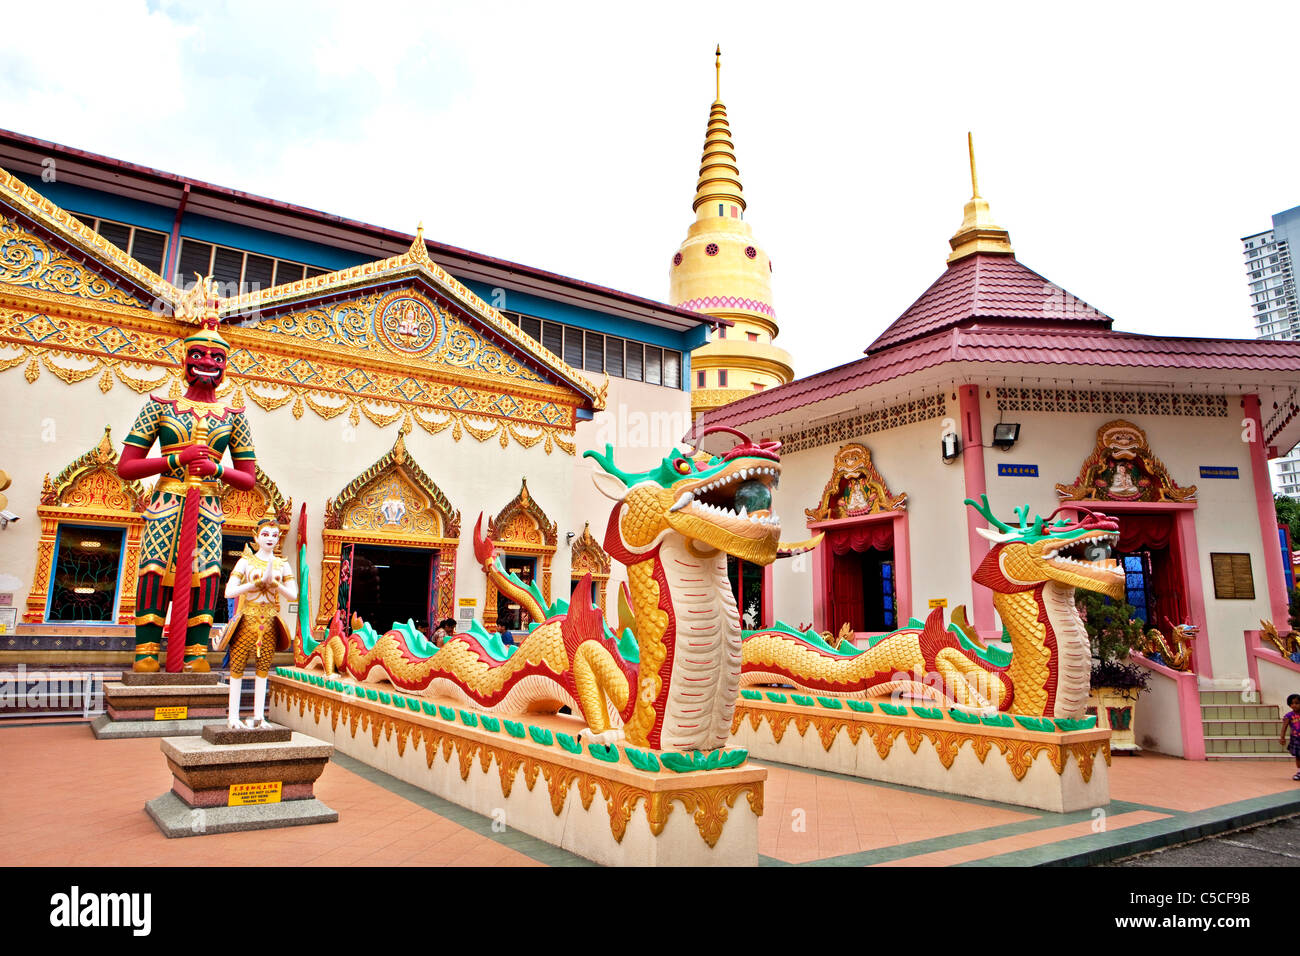 Grandi serpenti proteggendo l'ingresso al tempio thailandese, Wat Chayamangkalaram, Penang, Malaysia Foto Stock